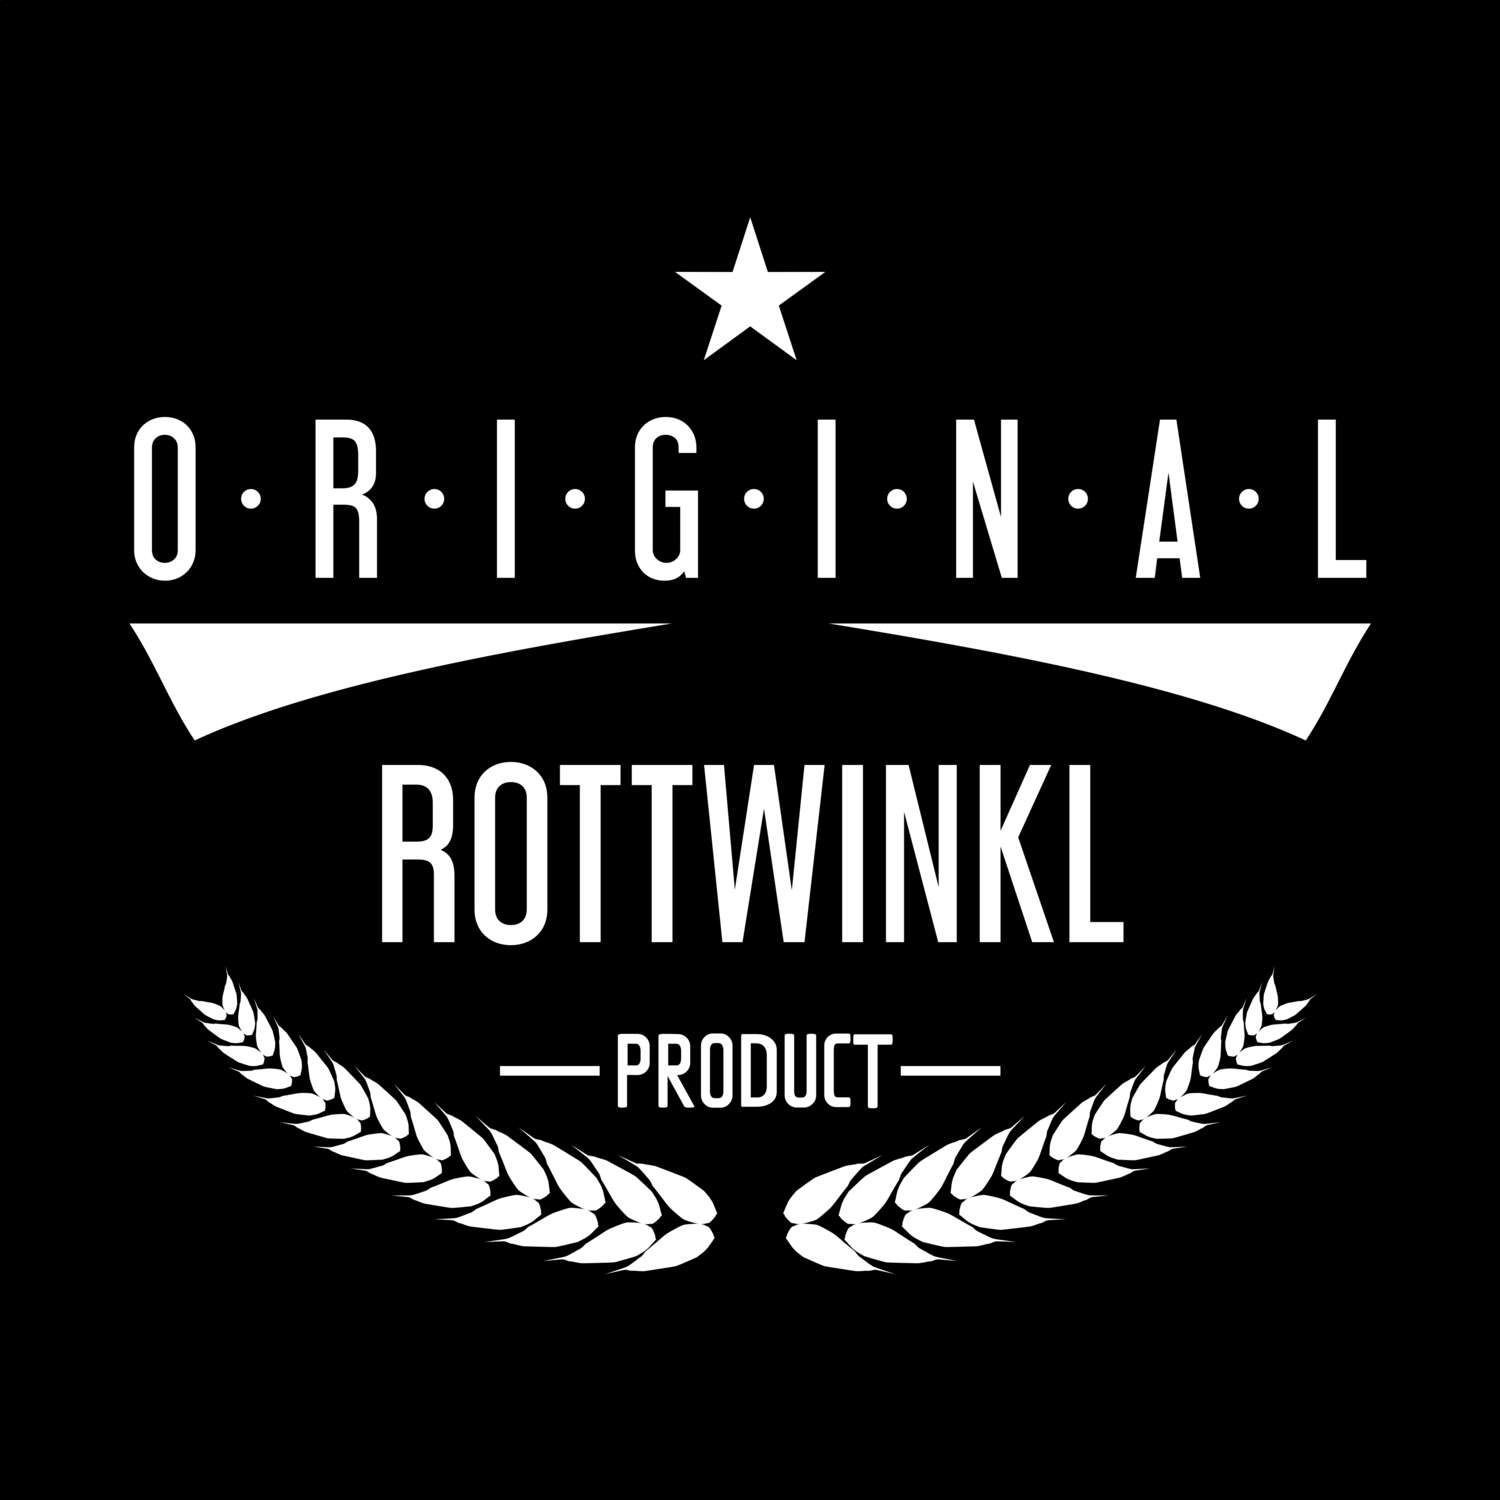 Rottwinkl T-Shirt »Original Product«